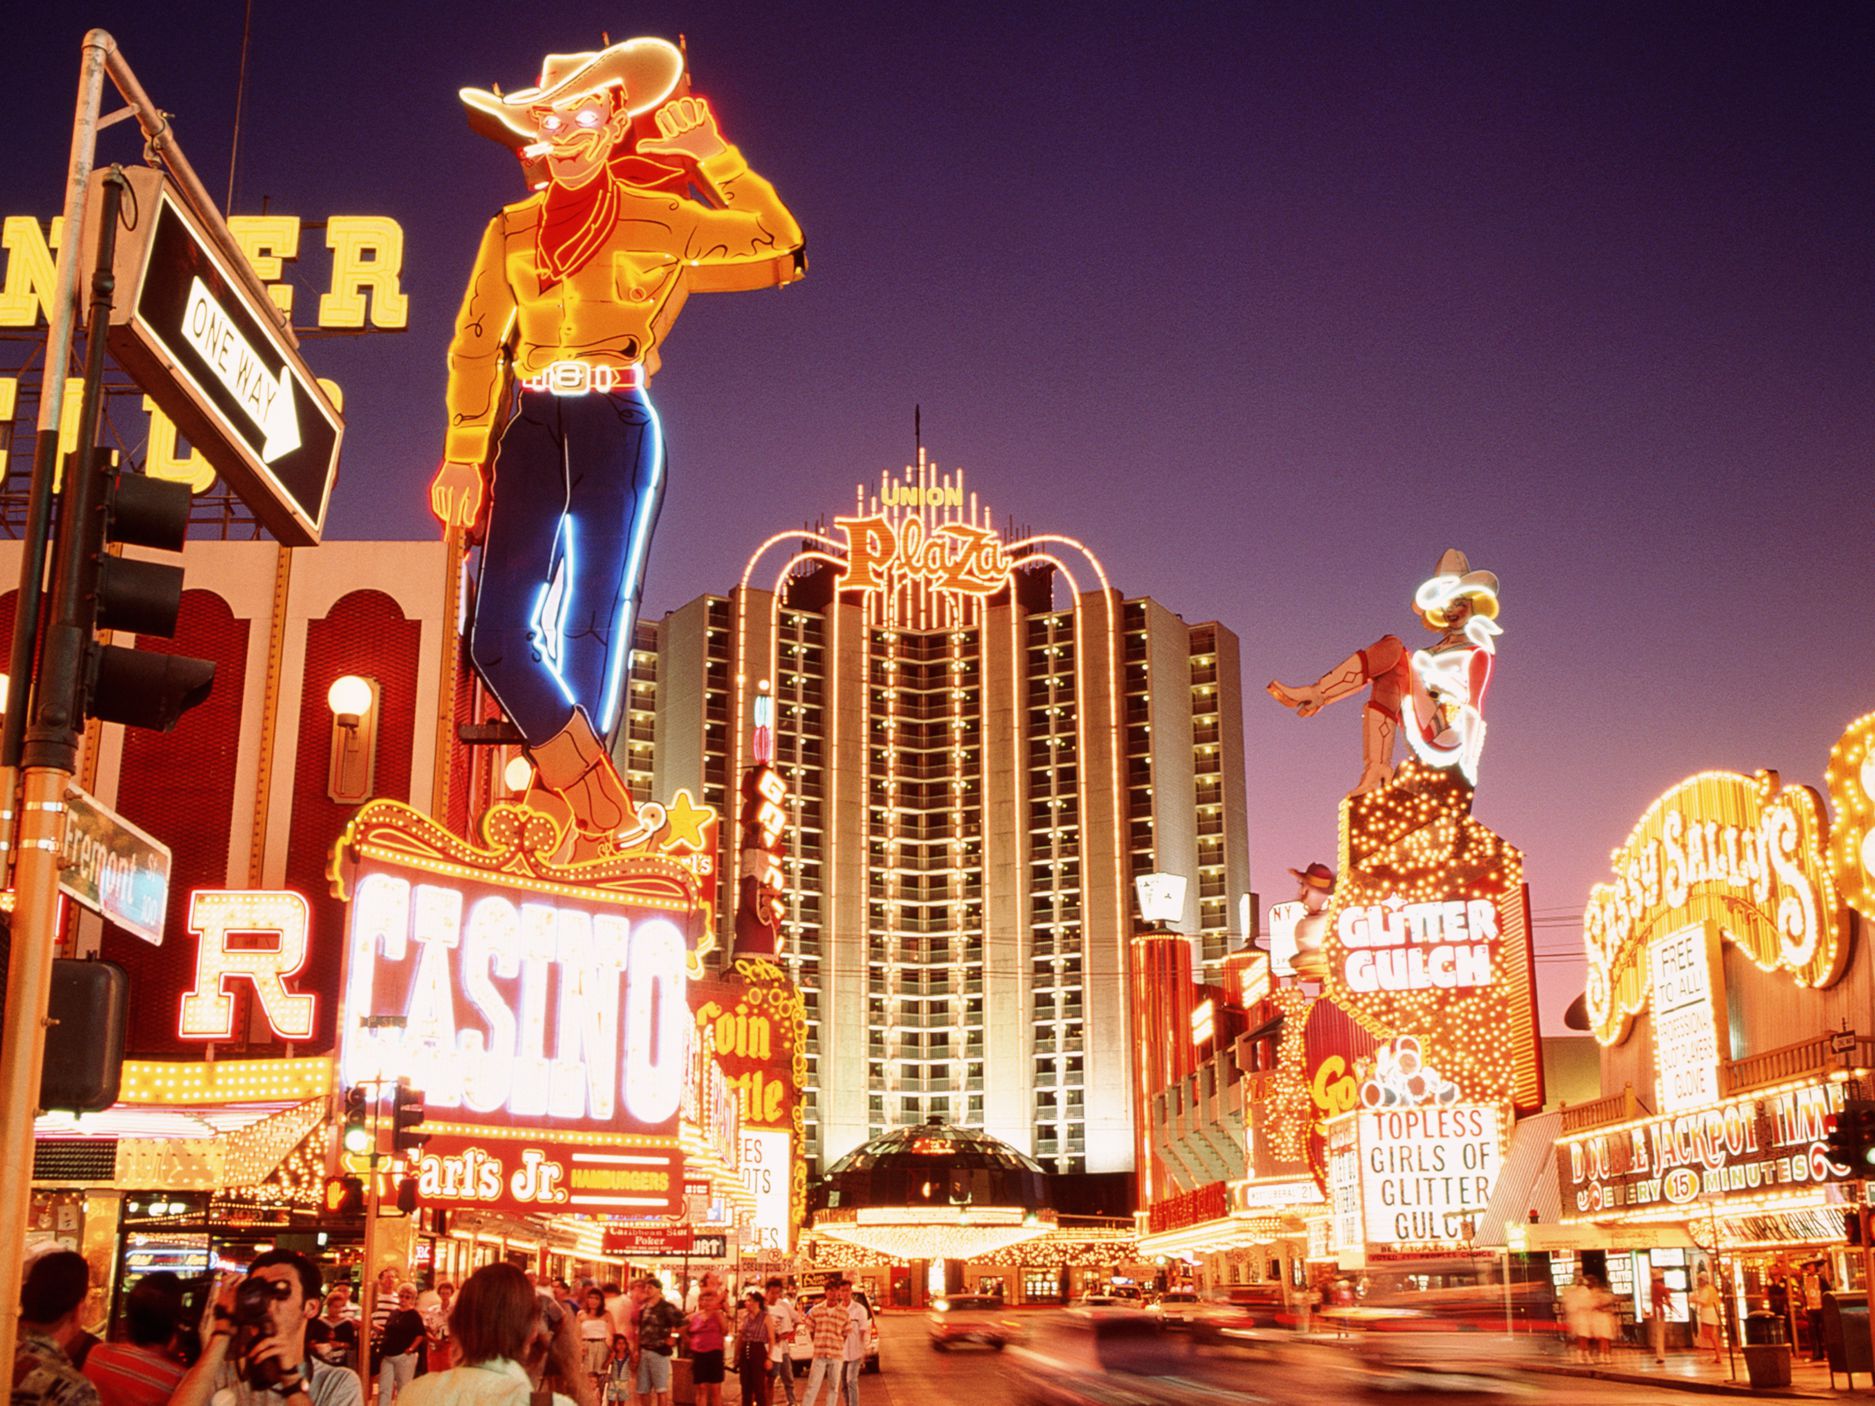 Mirage Hotel and Casino in Las Vegas